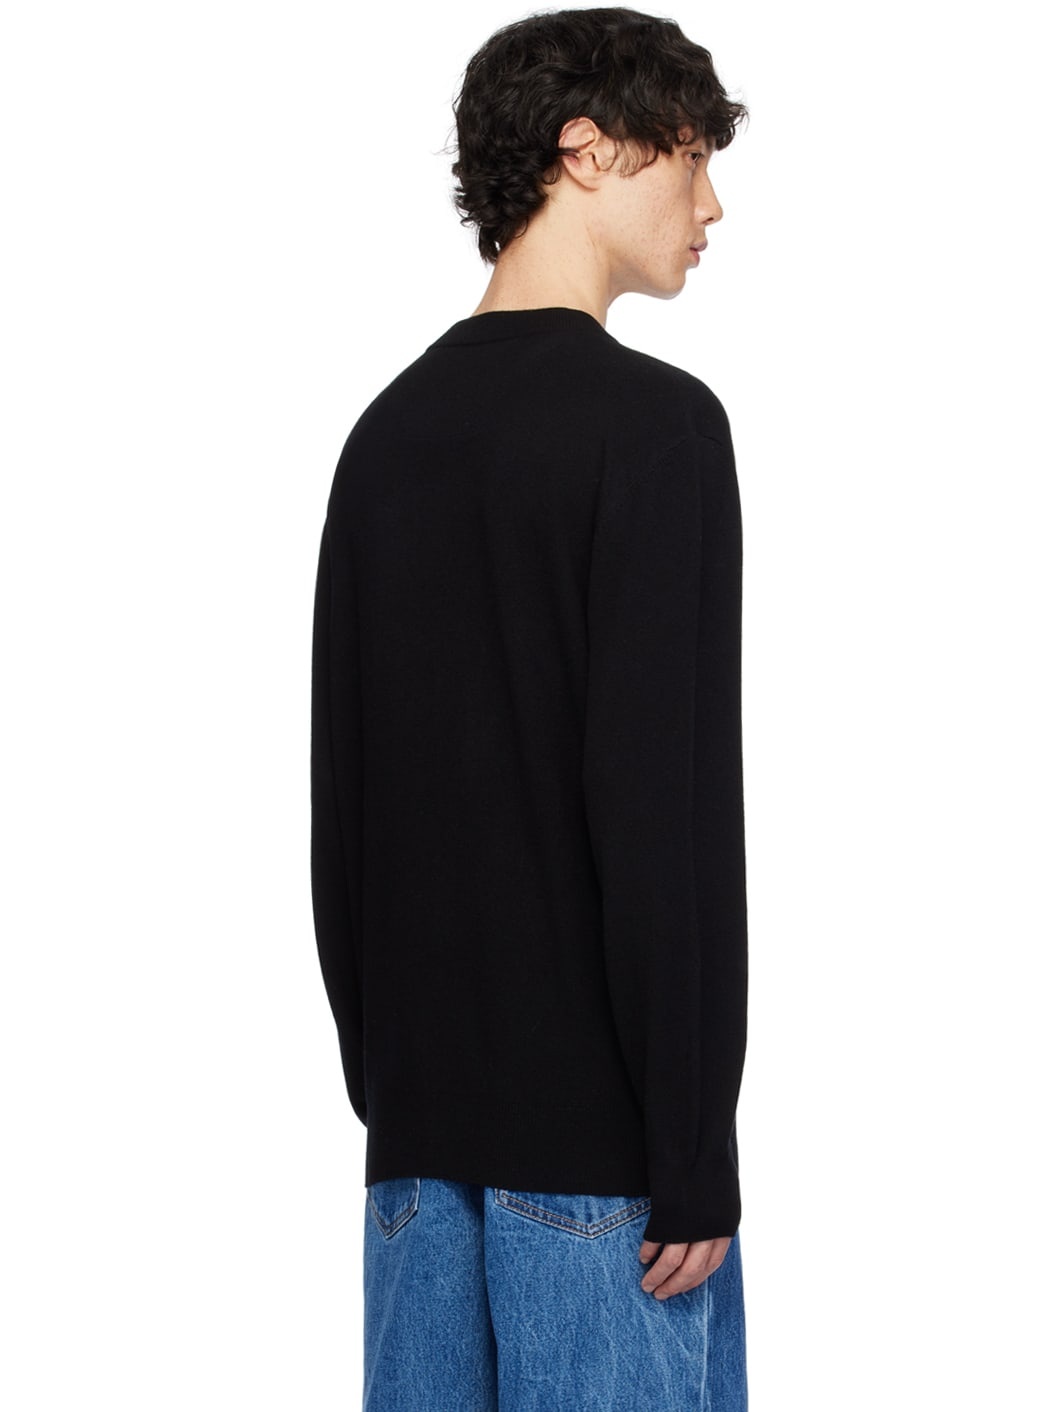 Black Jacquard Sweater - 3